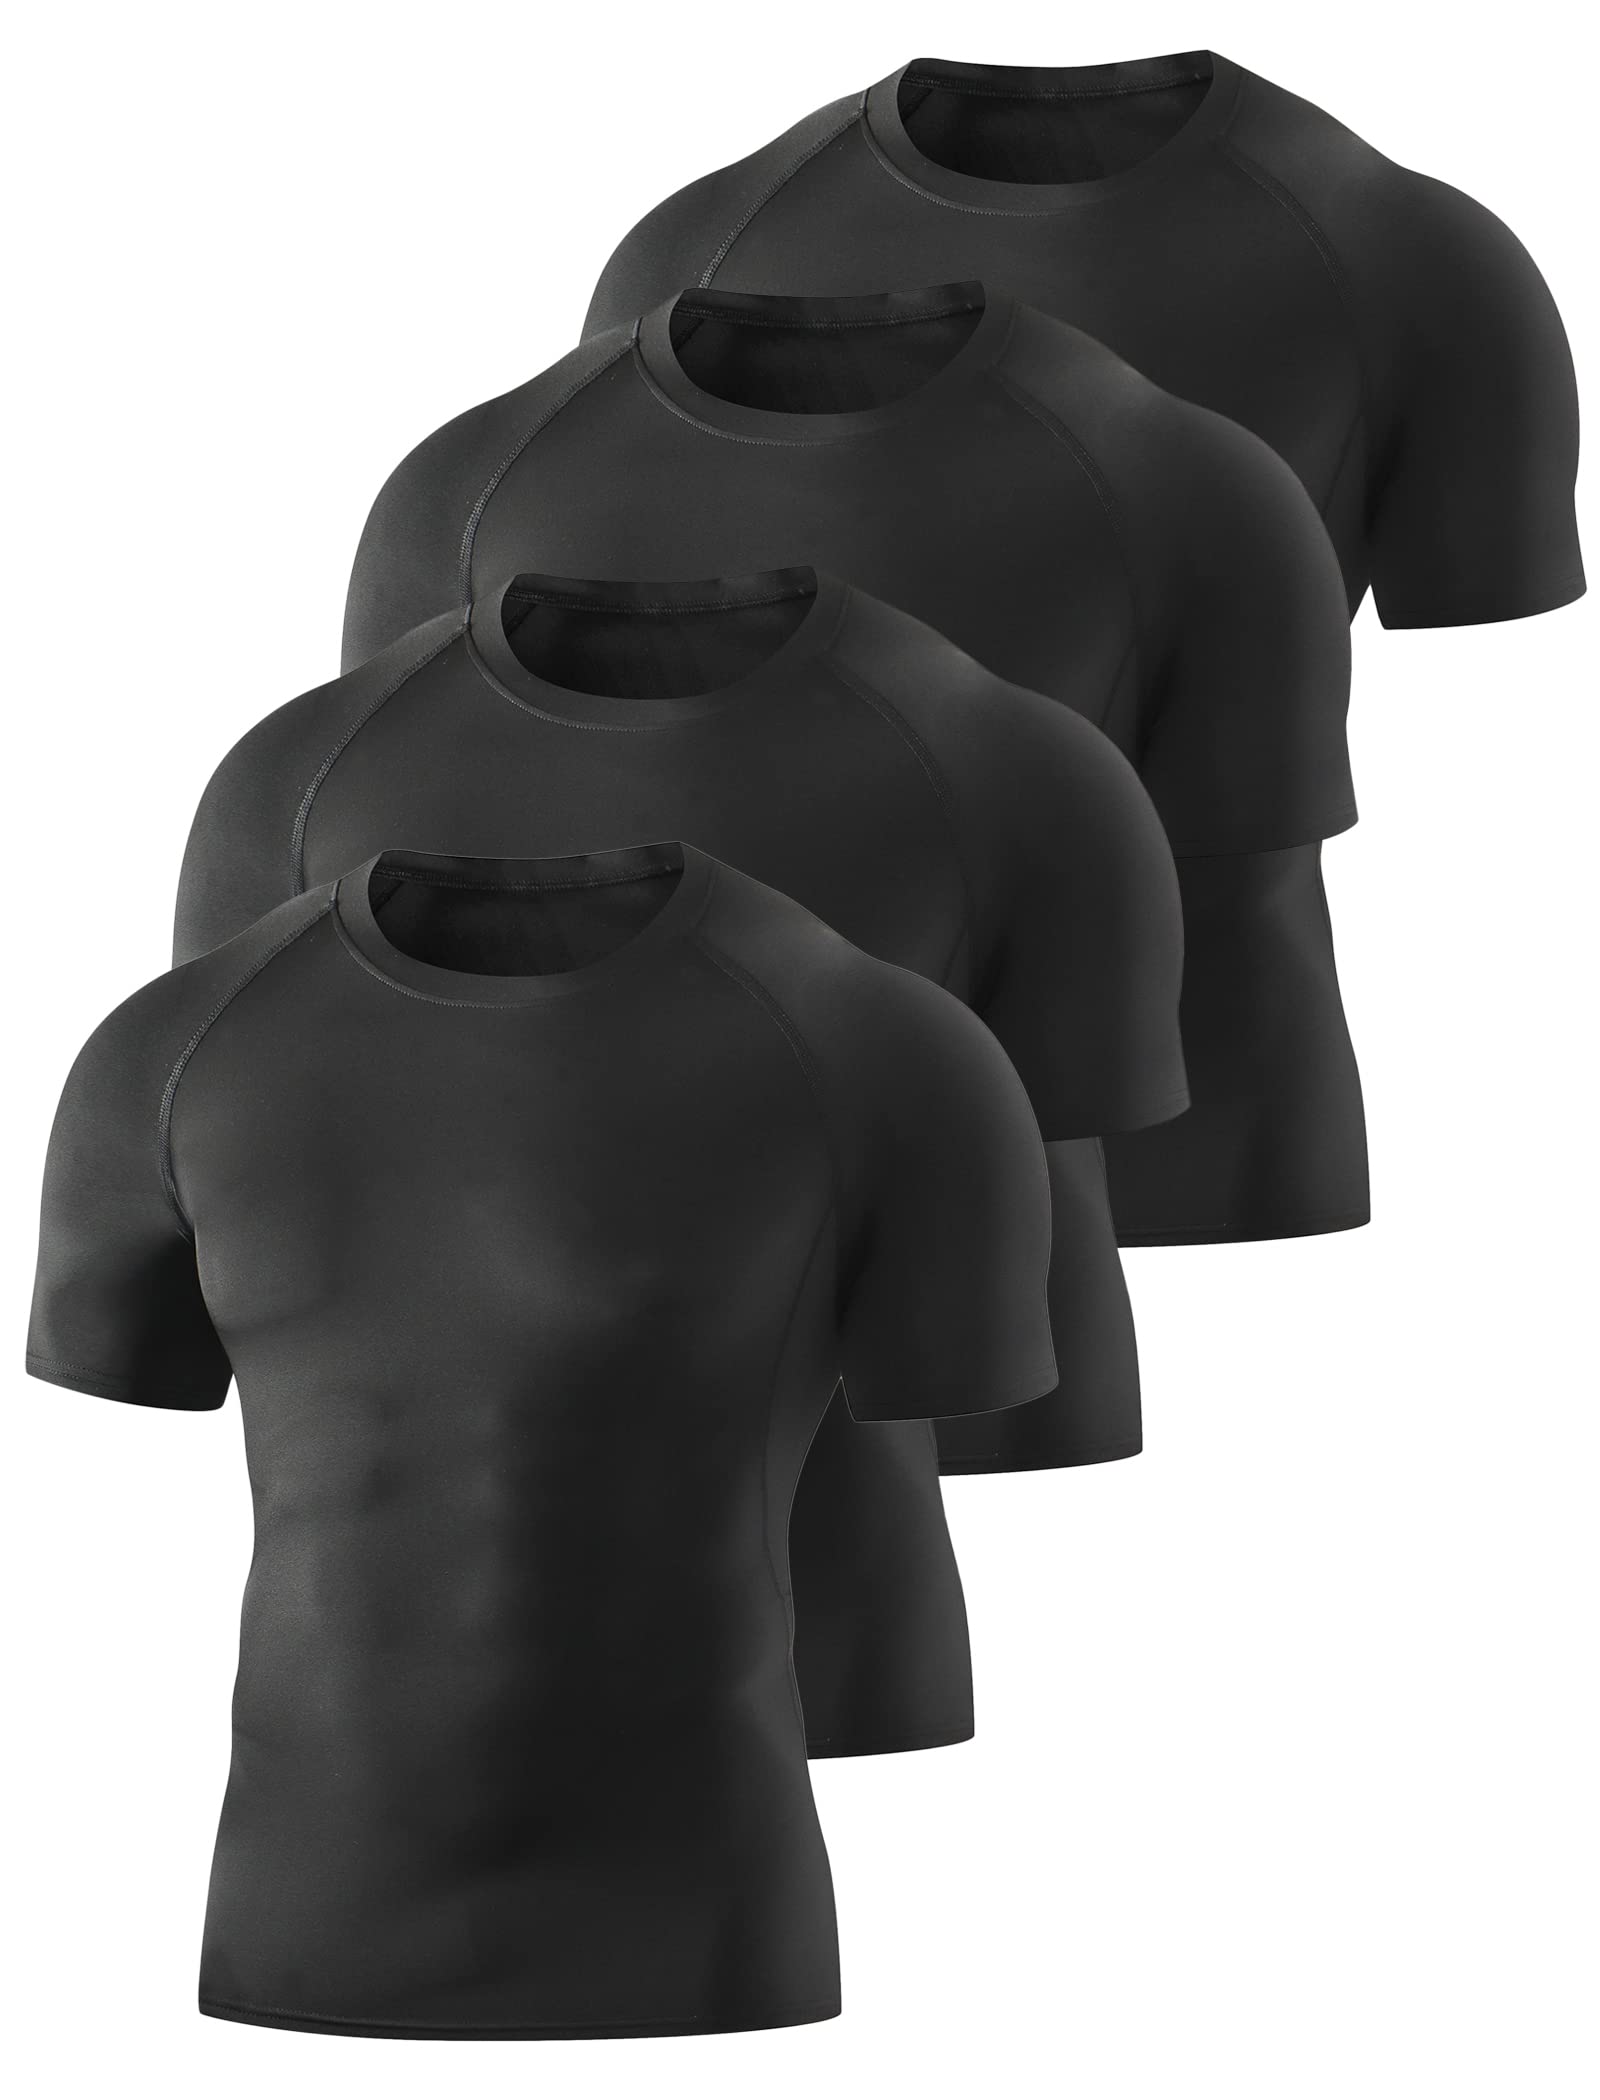 TELALEO 5/6 Pack Compression Shorts Men Spandex Sport Shorts Athletic  Workout Running Performance Baselayer Underwear